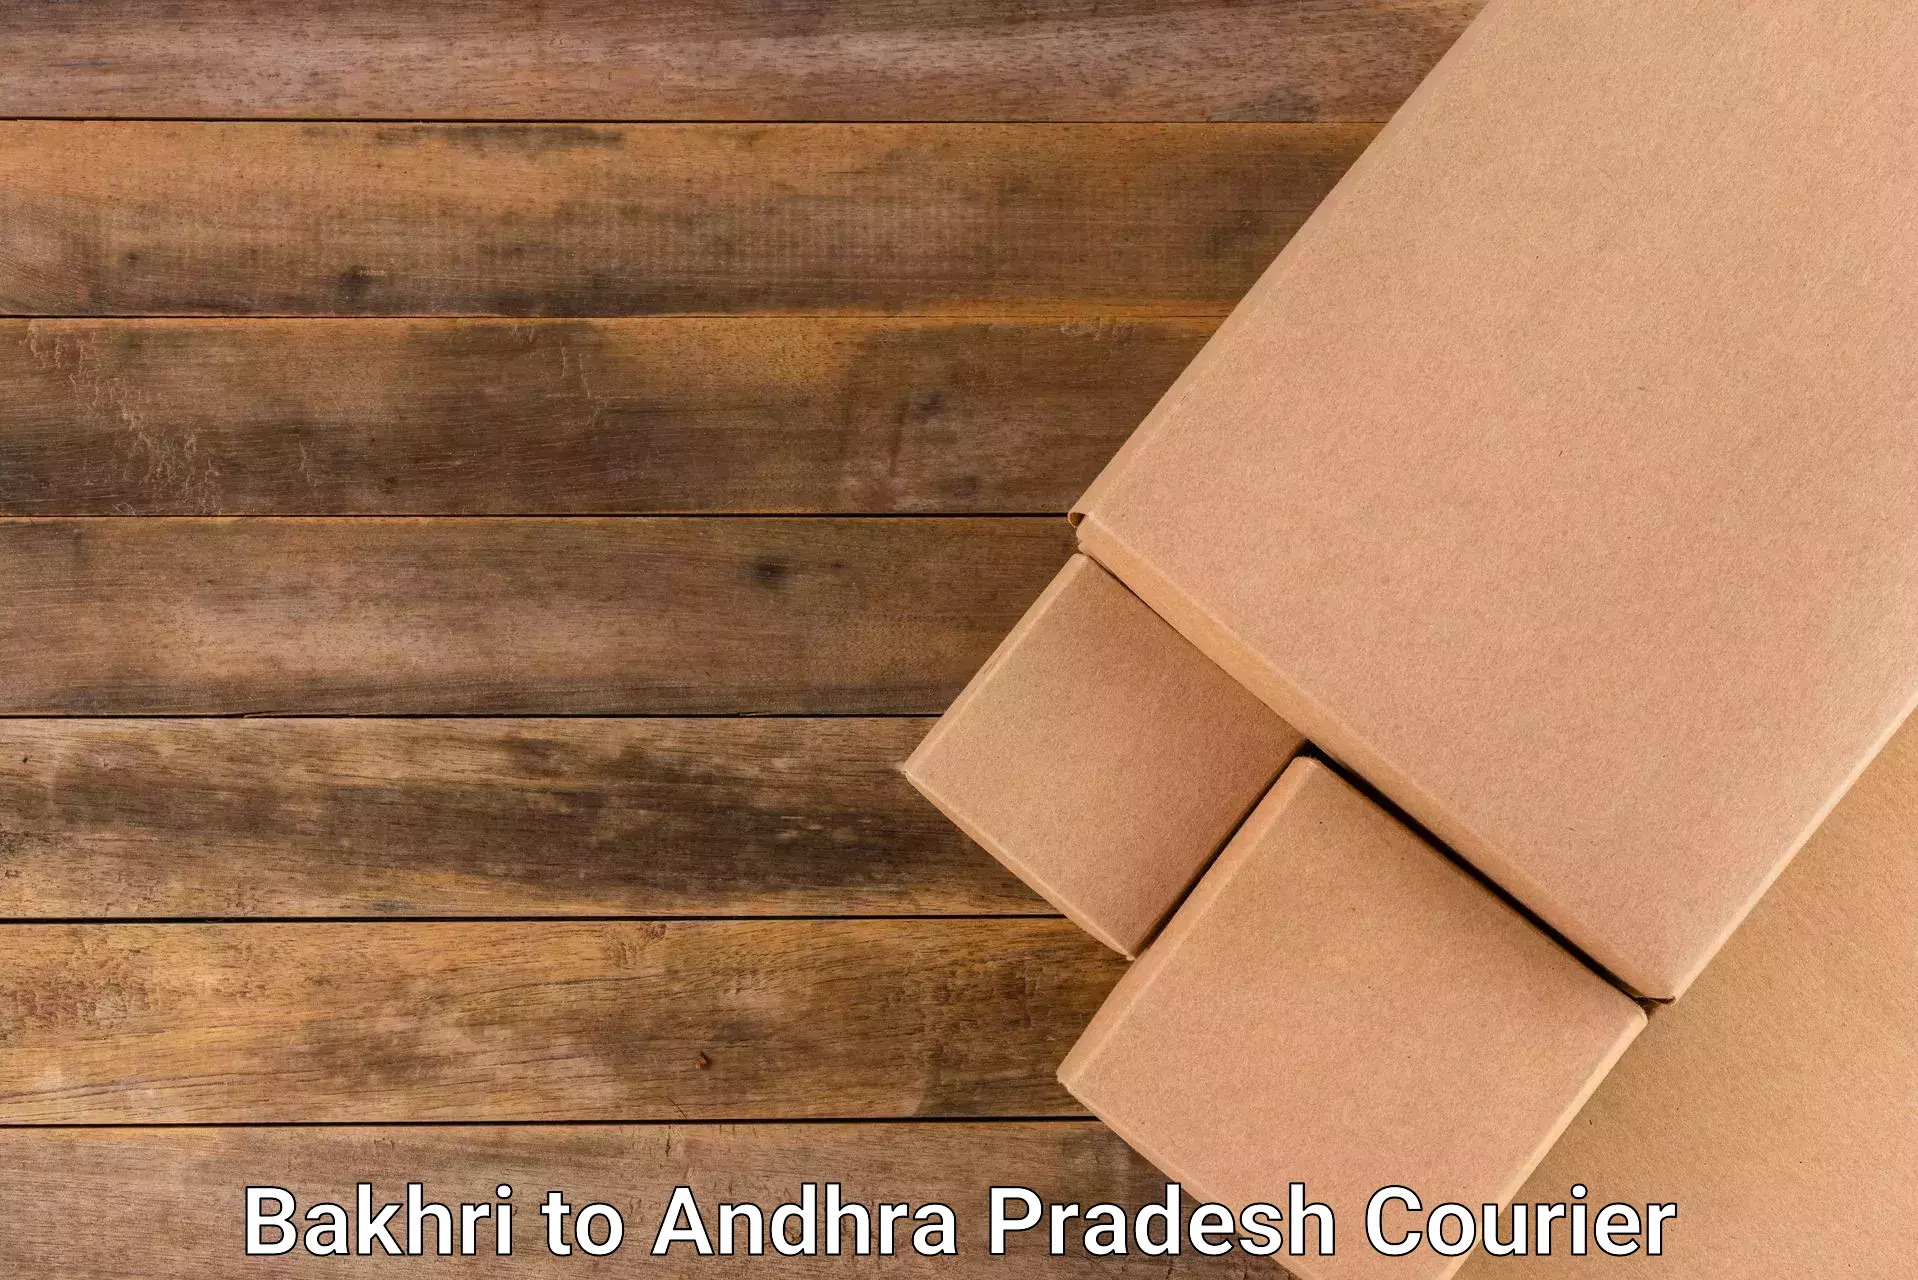 Delivery service partnership Bakhri to Andhra Pradesh